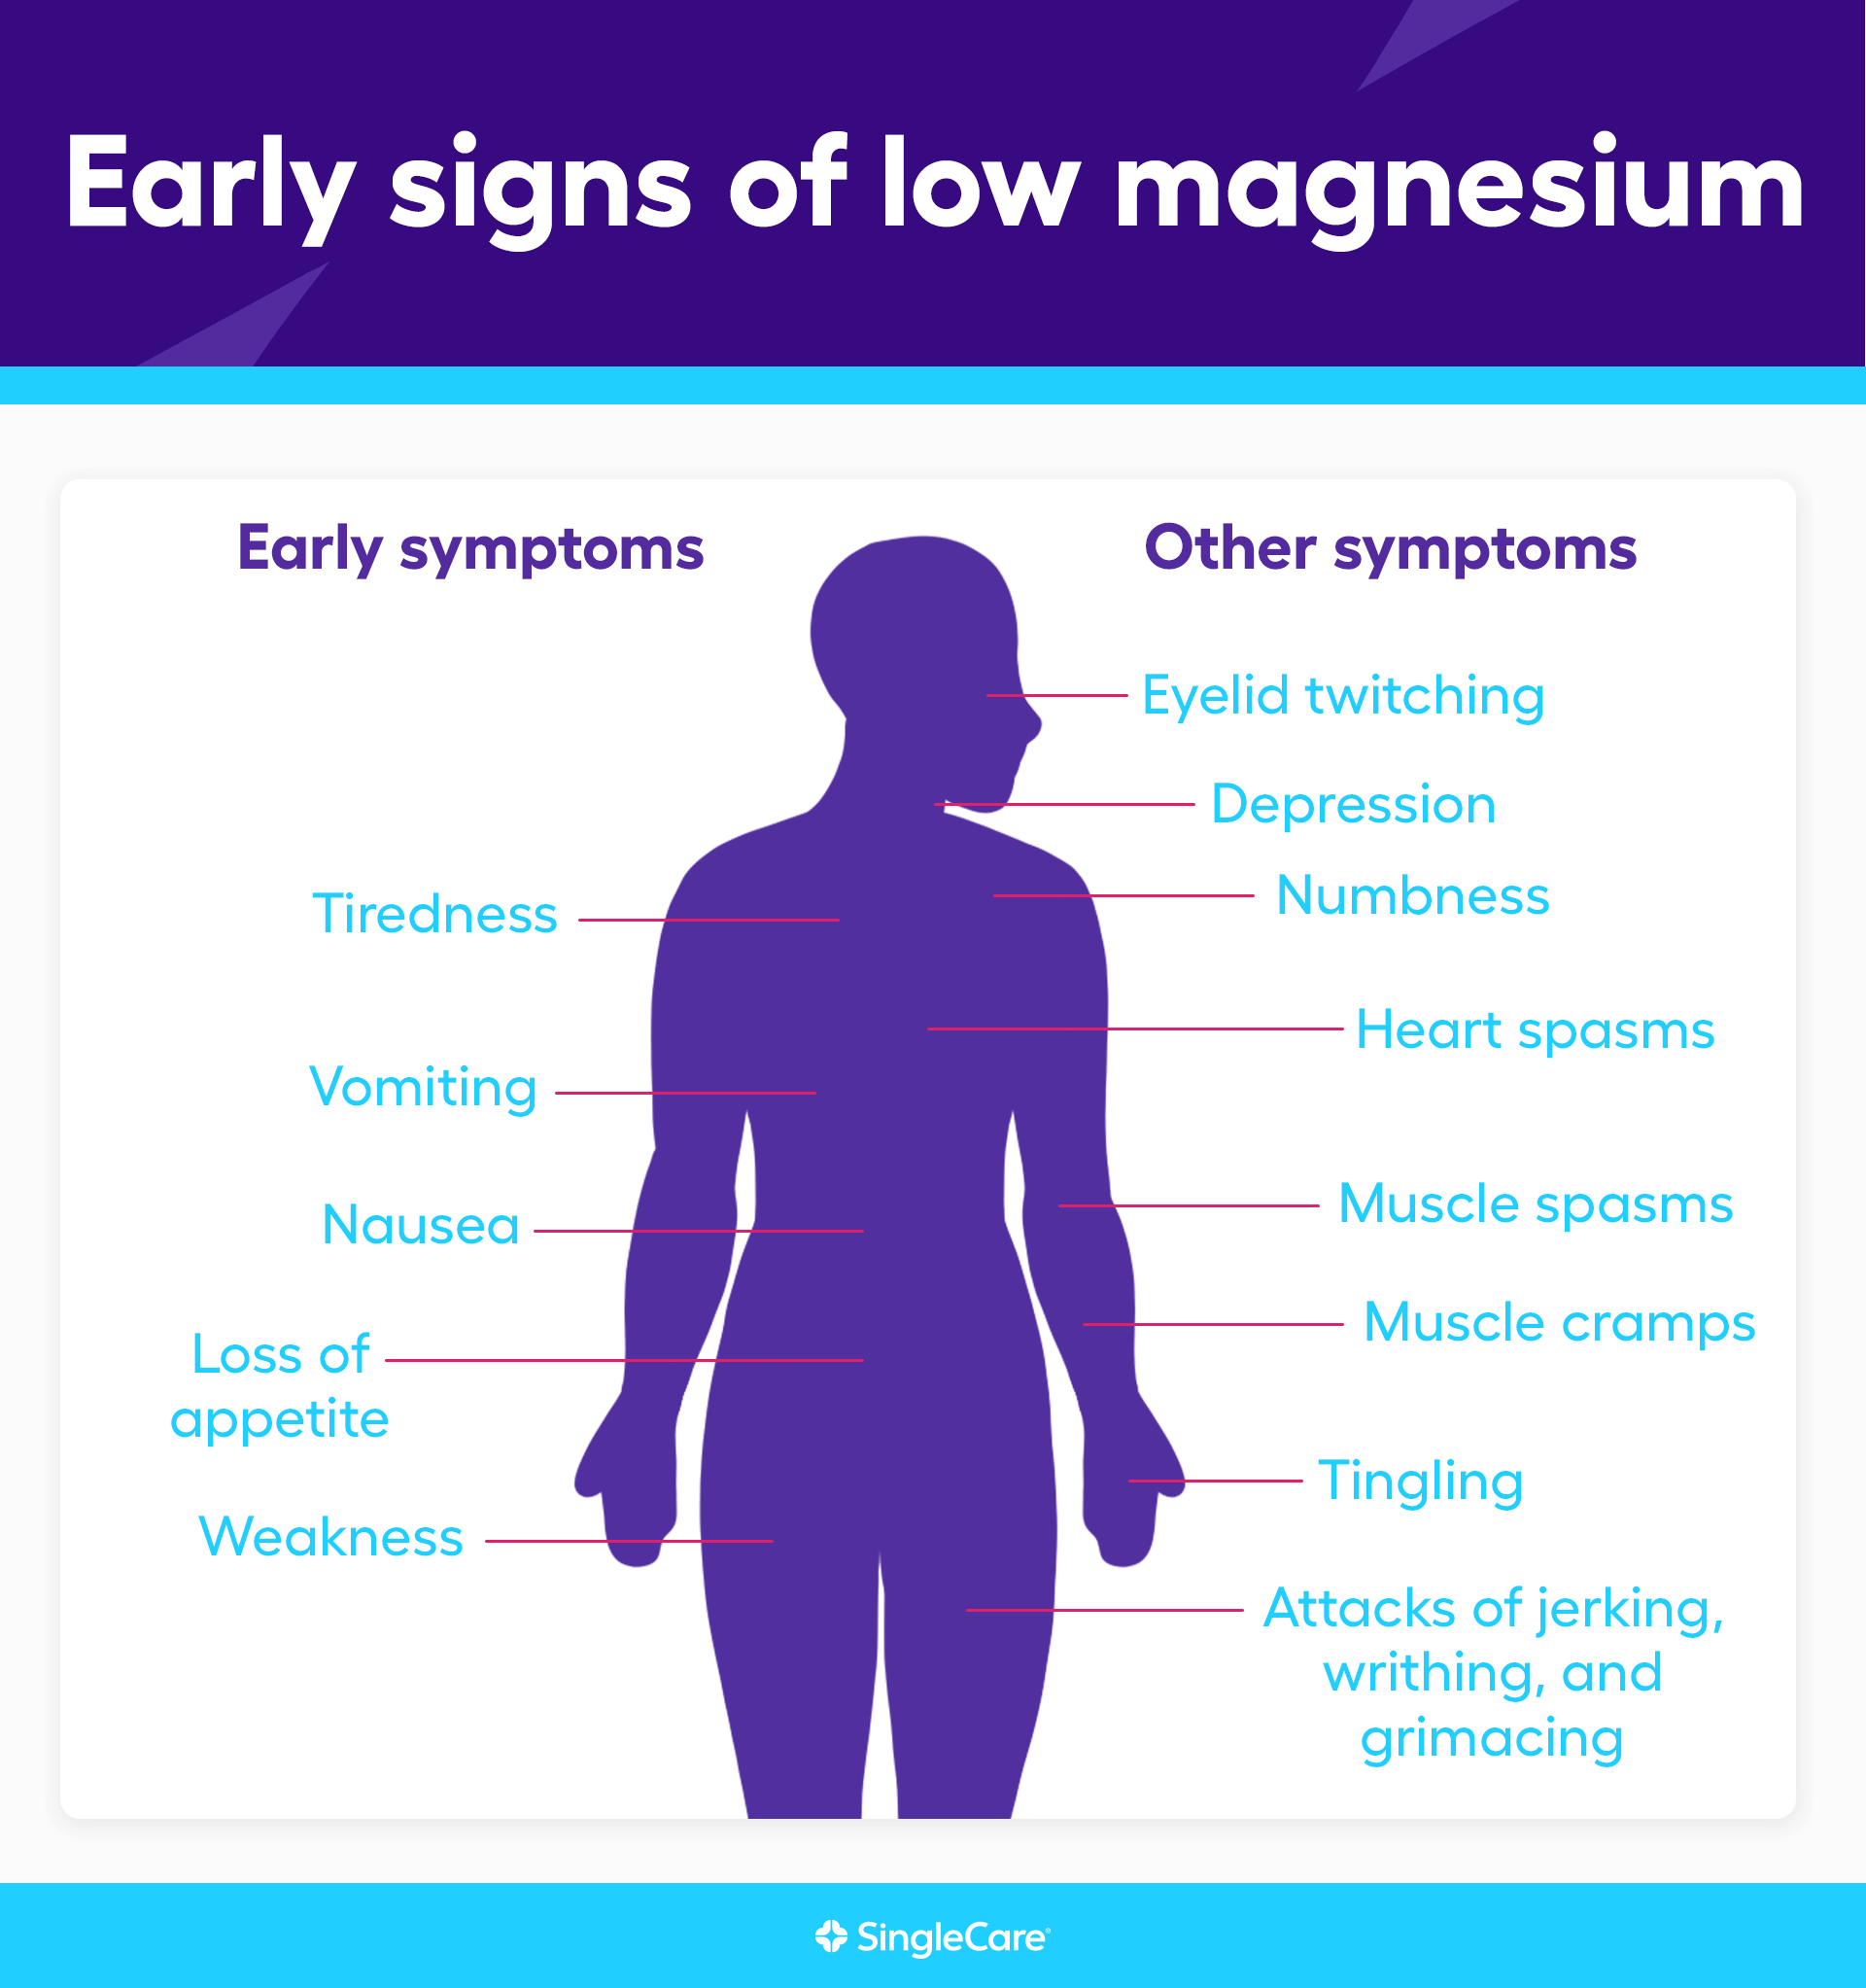 Magnesium deficiency symptoms